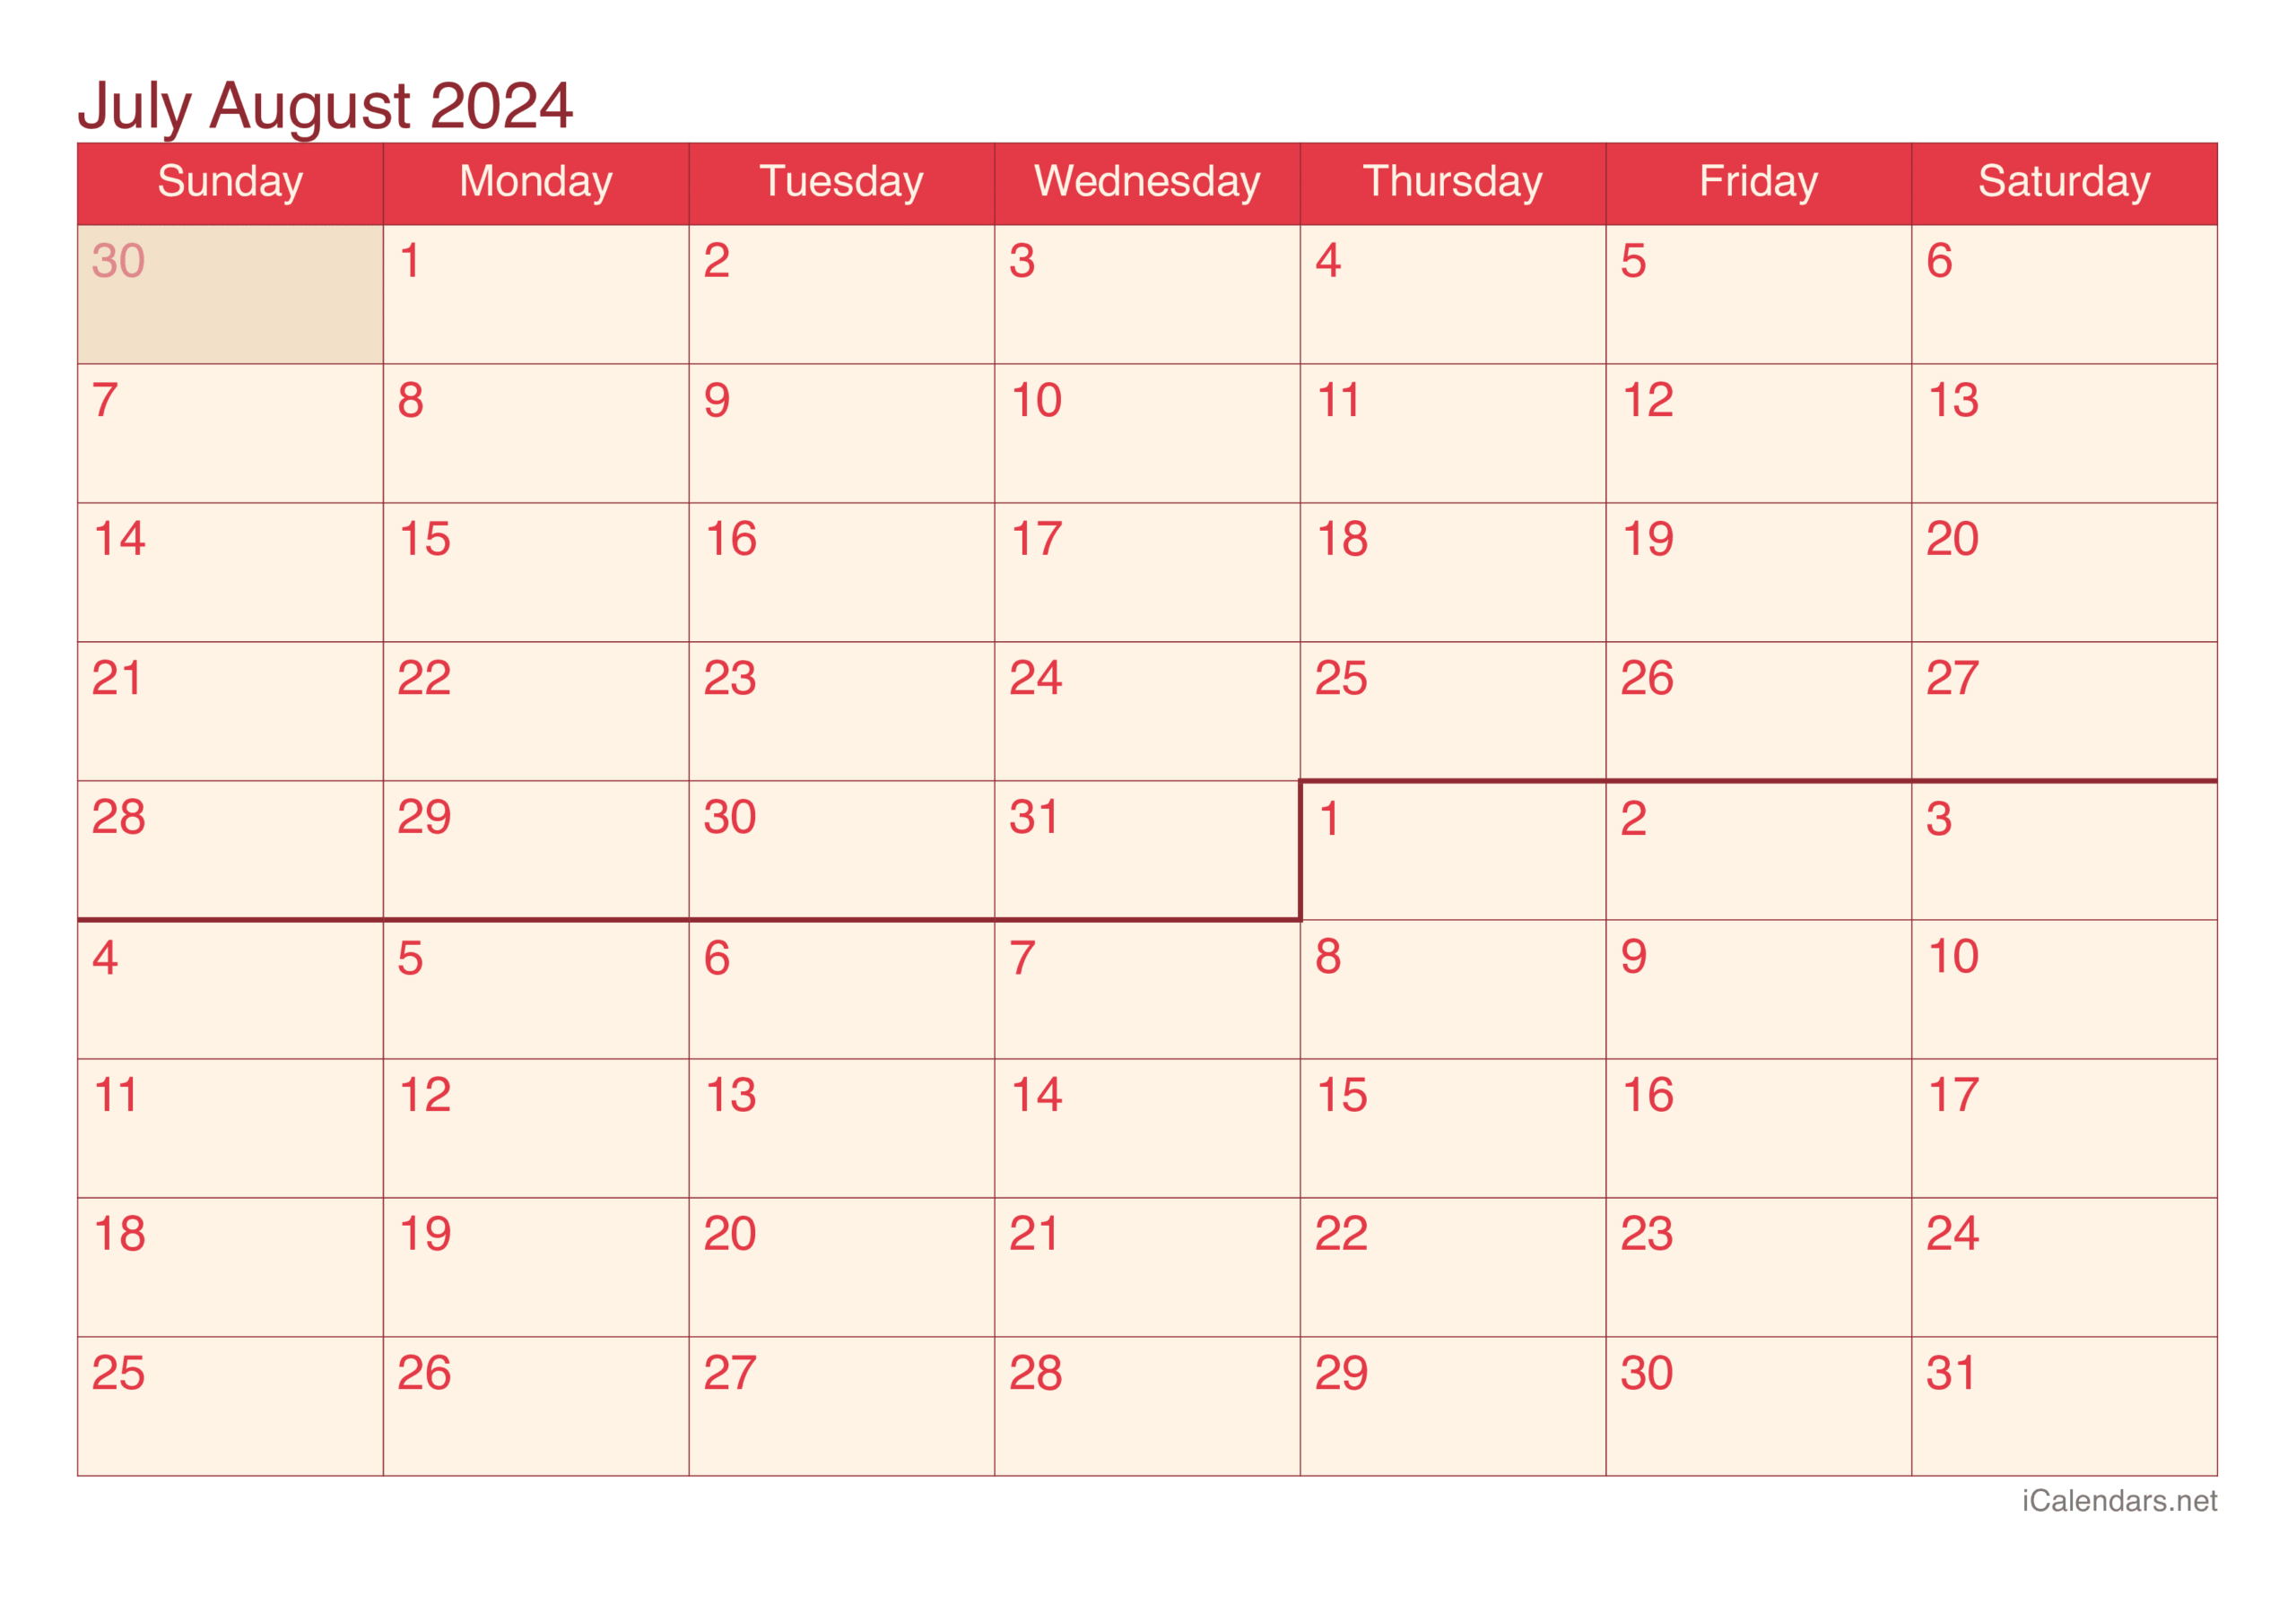 July And August 2024 Printable Calendar regarding Printable July and August 2024 Calendar